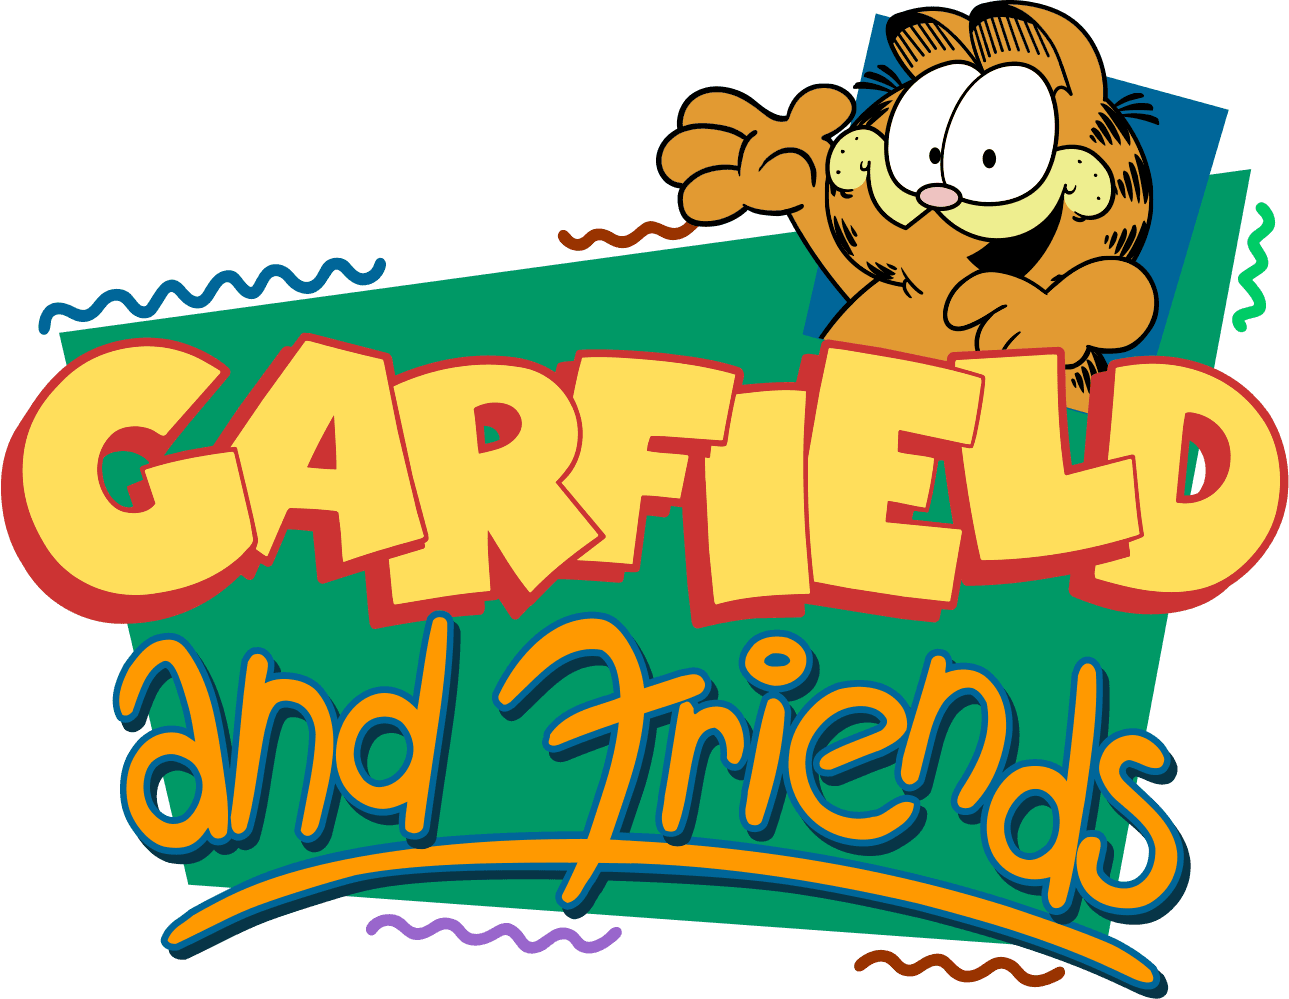 Garfield and Friends logo